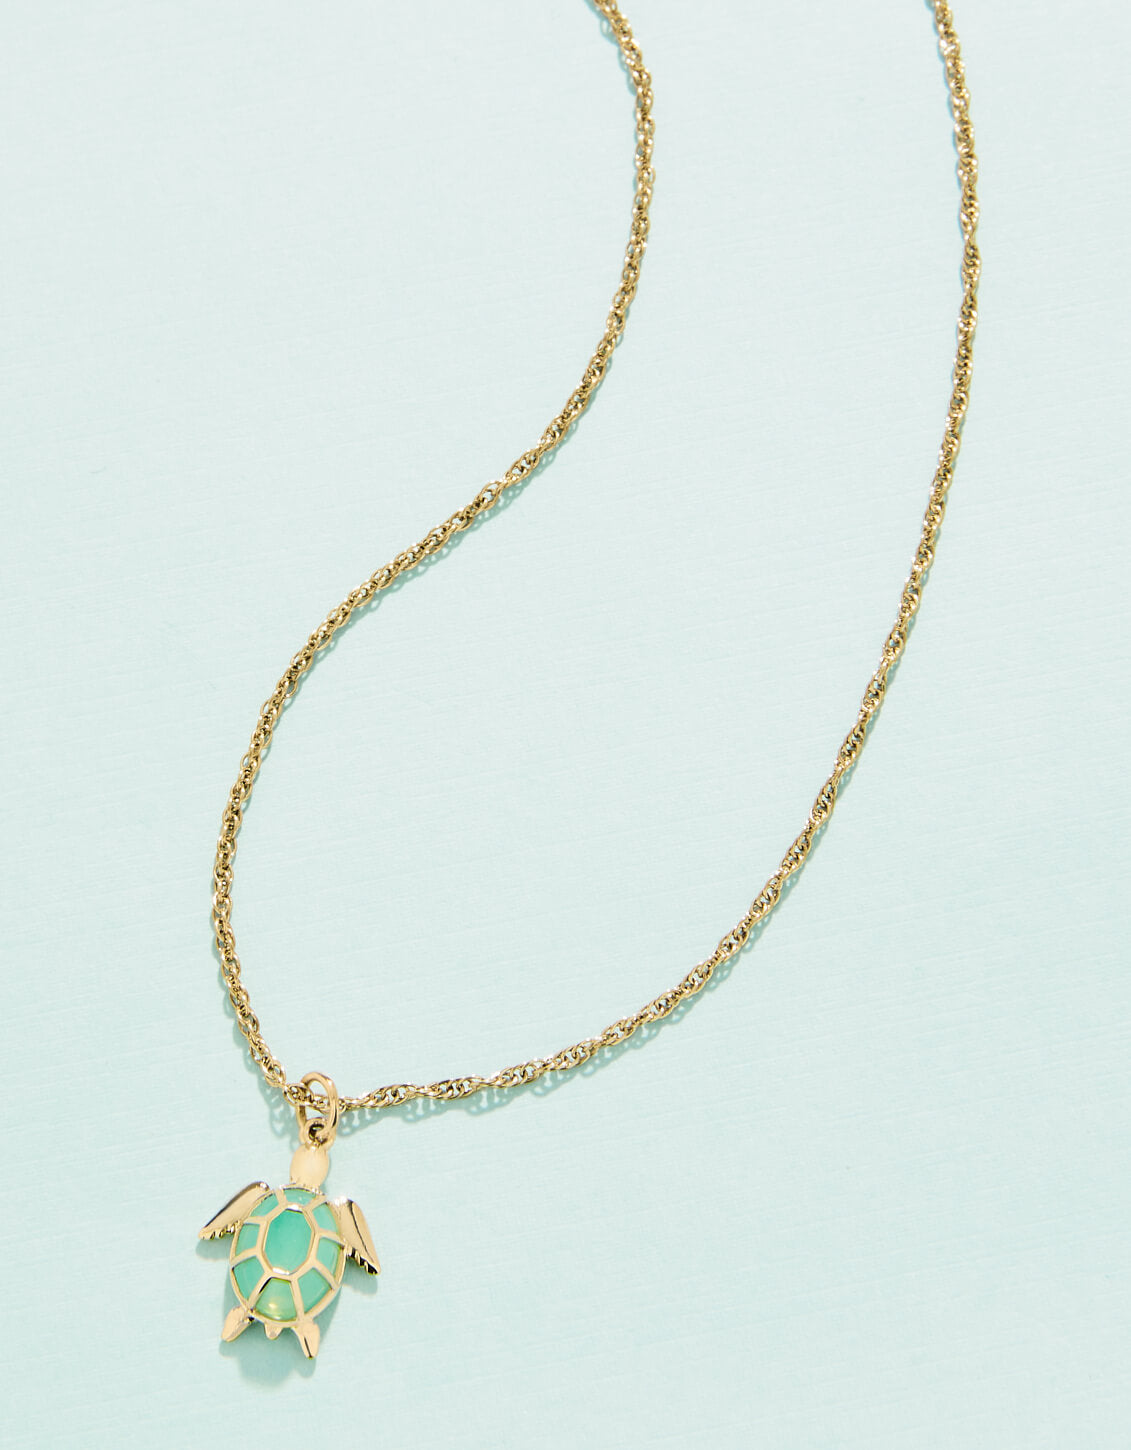 Blown Glass Turtle - Emerald Green Tribal - Pendant - Glass Art - Sea Turtle  - Handmade - Unique Jewelry - Cute -Turtle Necklace -Gift Ideas